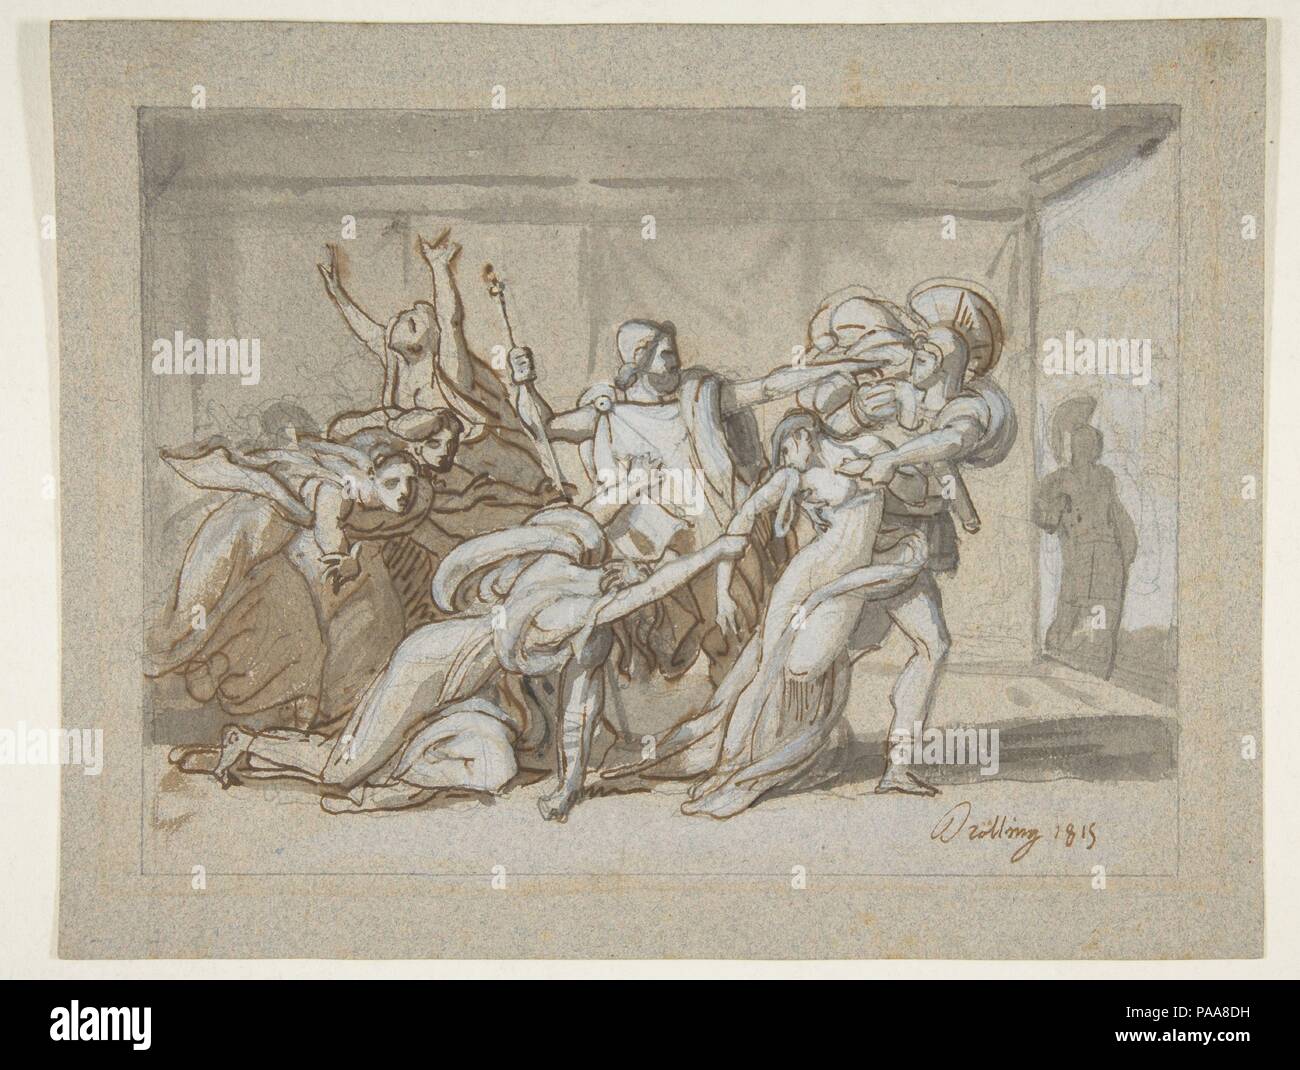 Scene from the Iliad. Artist: Michael Martin Drölling (French, Paris 1786-1851 Paris). Dimensions: sheet: 8 1/16 x 10 7/16 in. (20.5 x 26.5 cm). Date: 1815. Museum: Metropolitan Museum of Art, New York, USA. Stock Photo